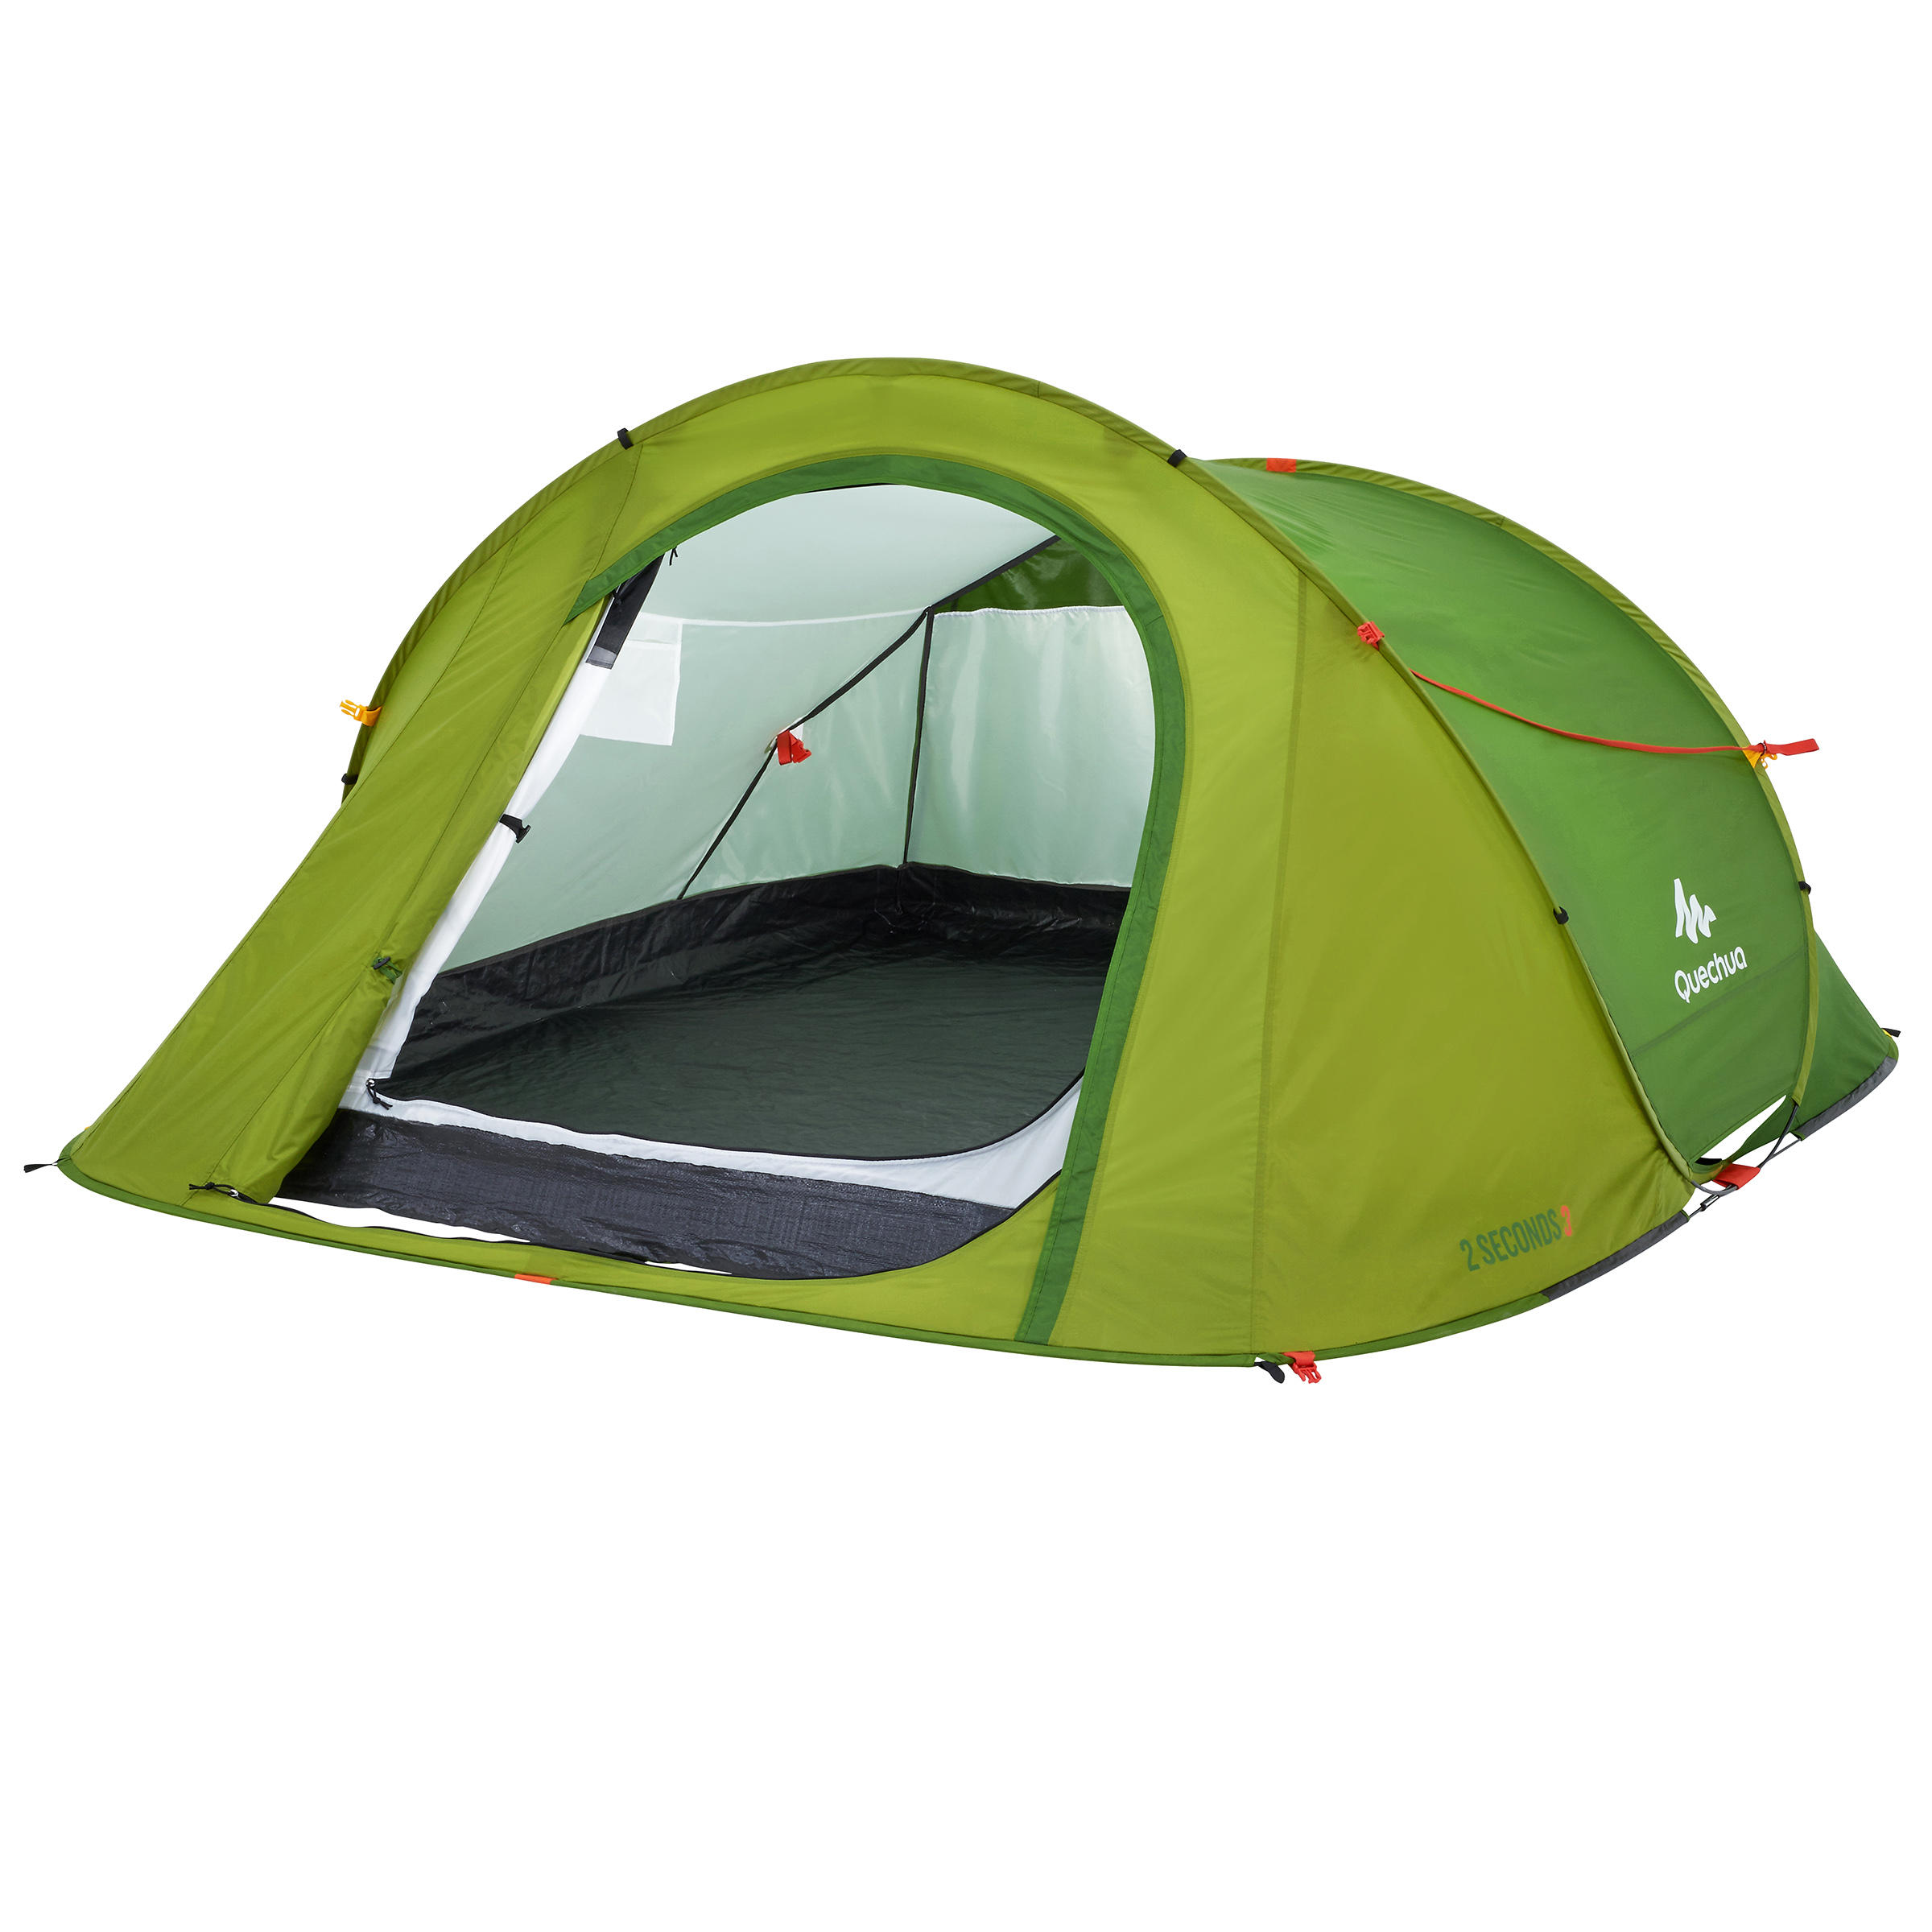 QUECHUA 2 Seconds Easy Camping Tent, Sleeps 3 - Green